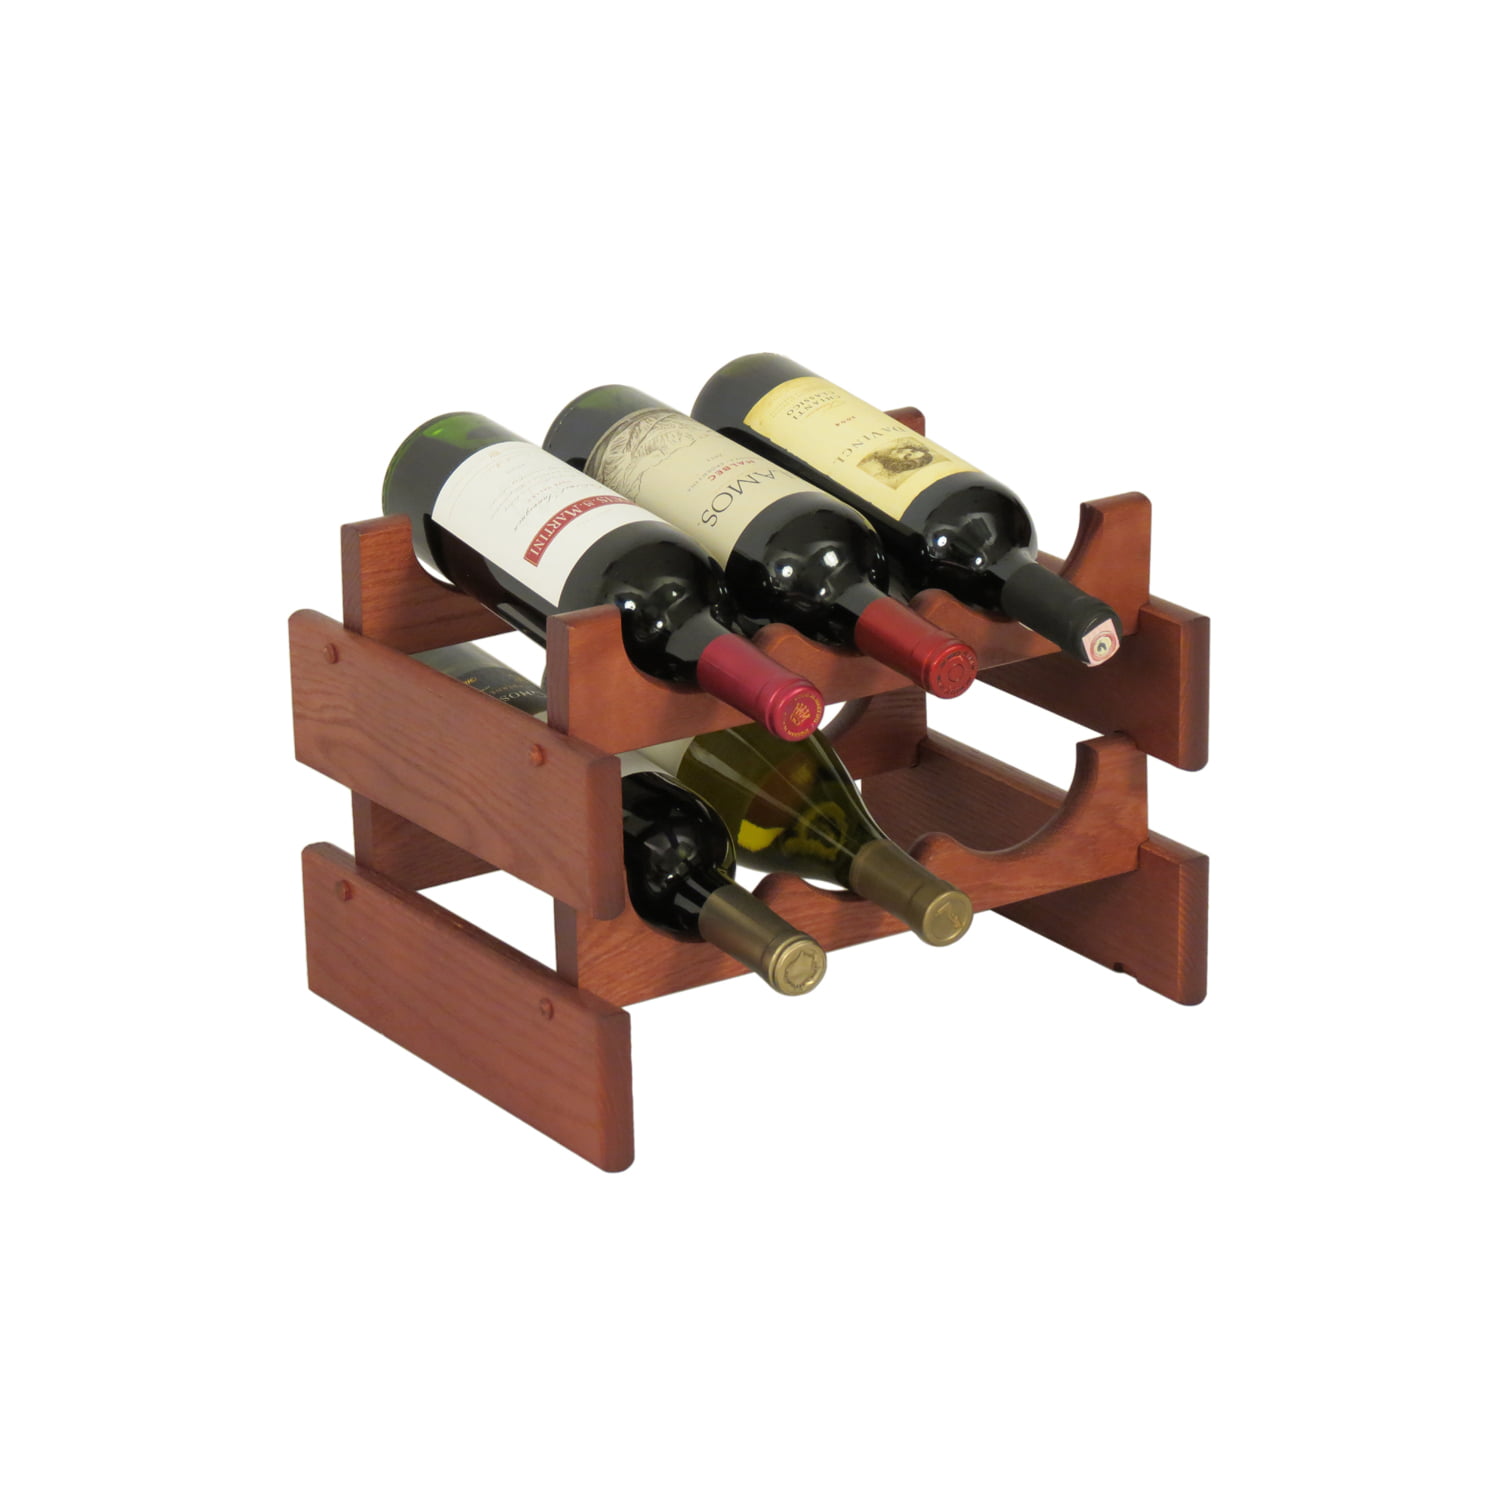 4 Bottles Countertop Wine Racks Storage for Bar Basement Natural Bamboo Color LIANTRAL Wine Rack Pantry Rustic Wood Wine Bottle Holder Cabinet